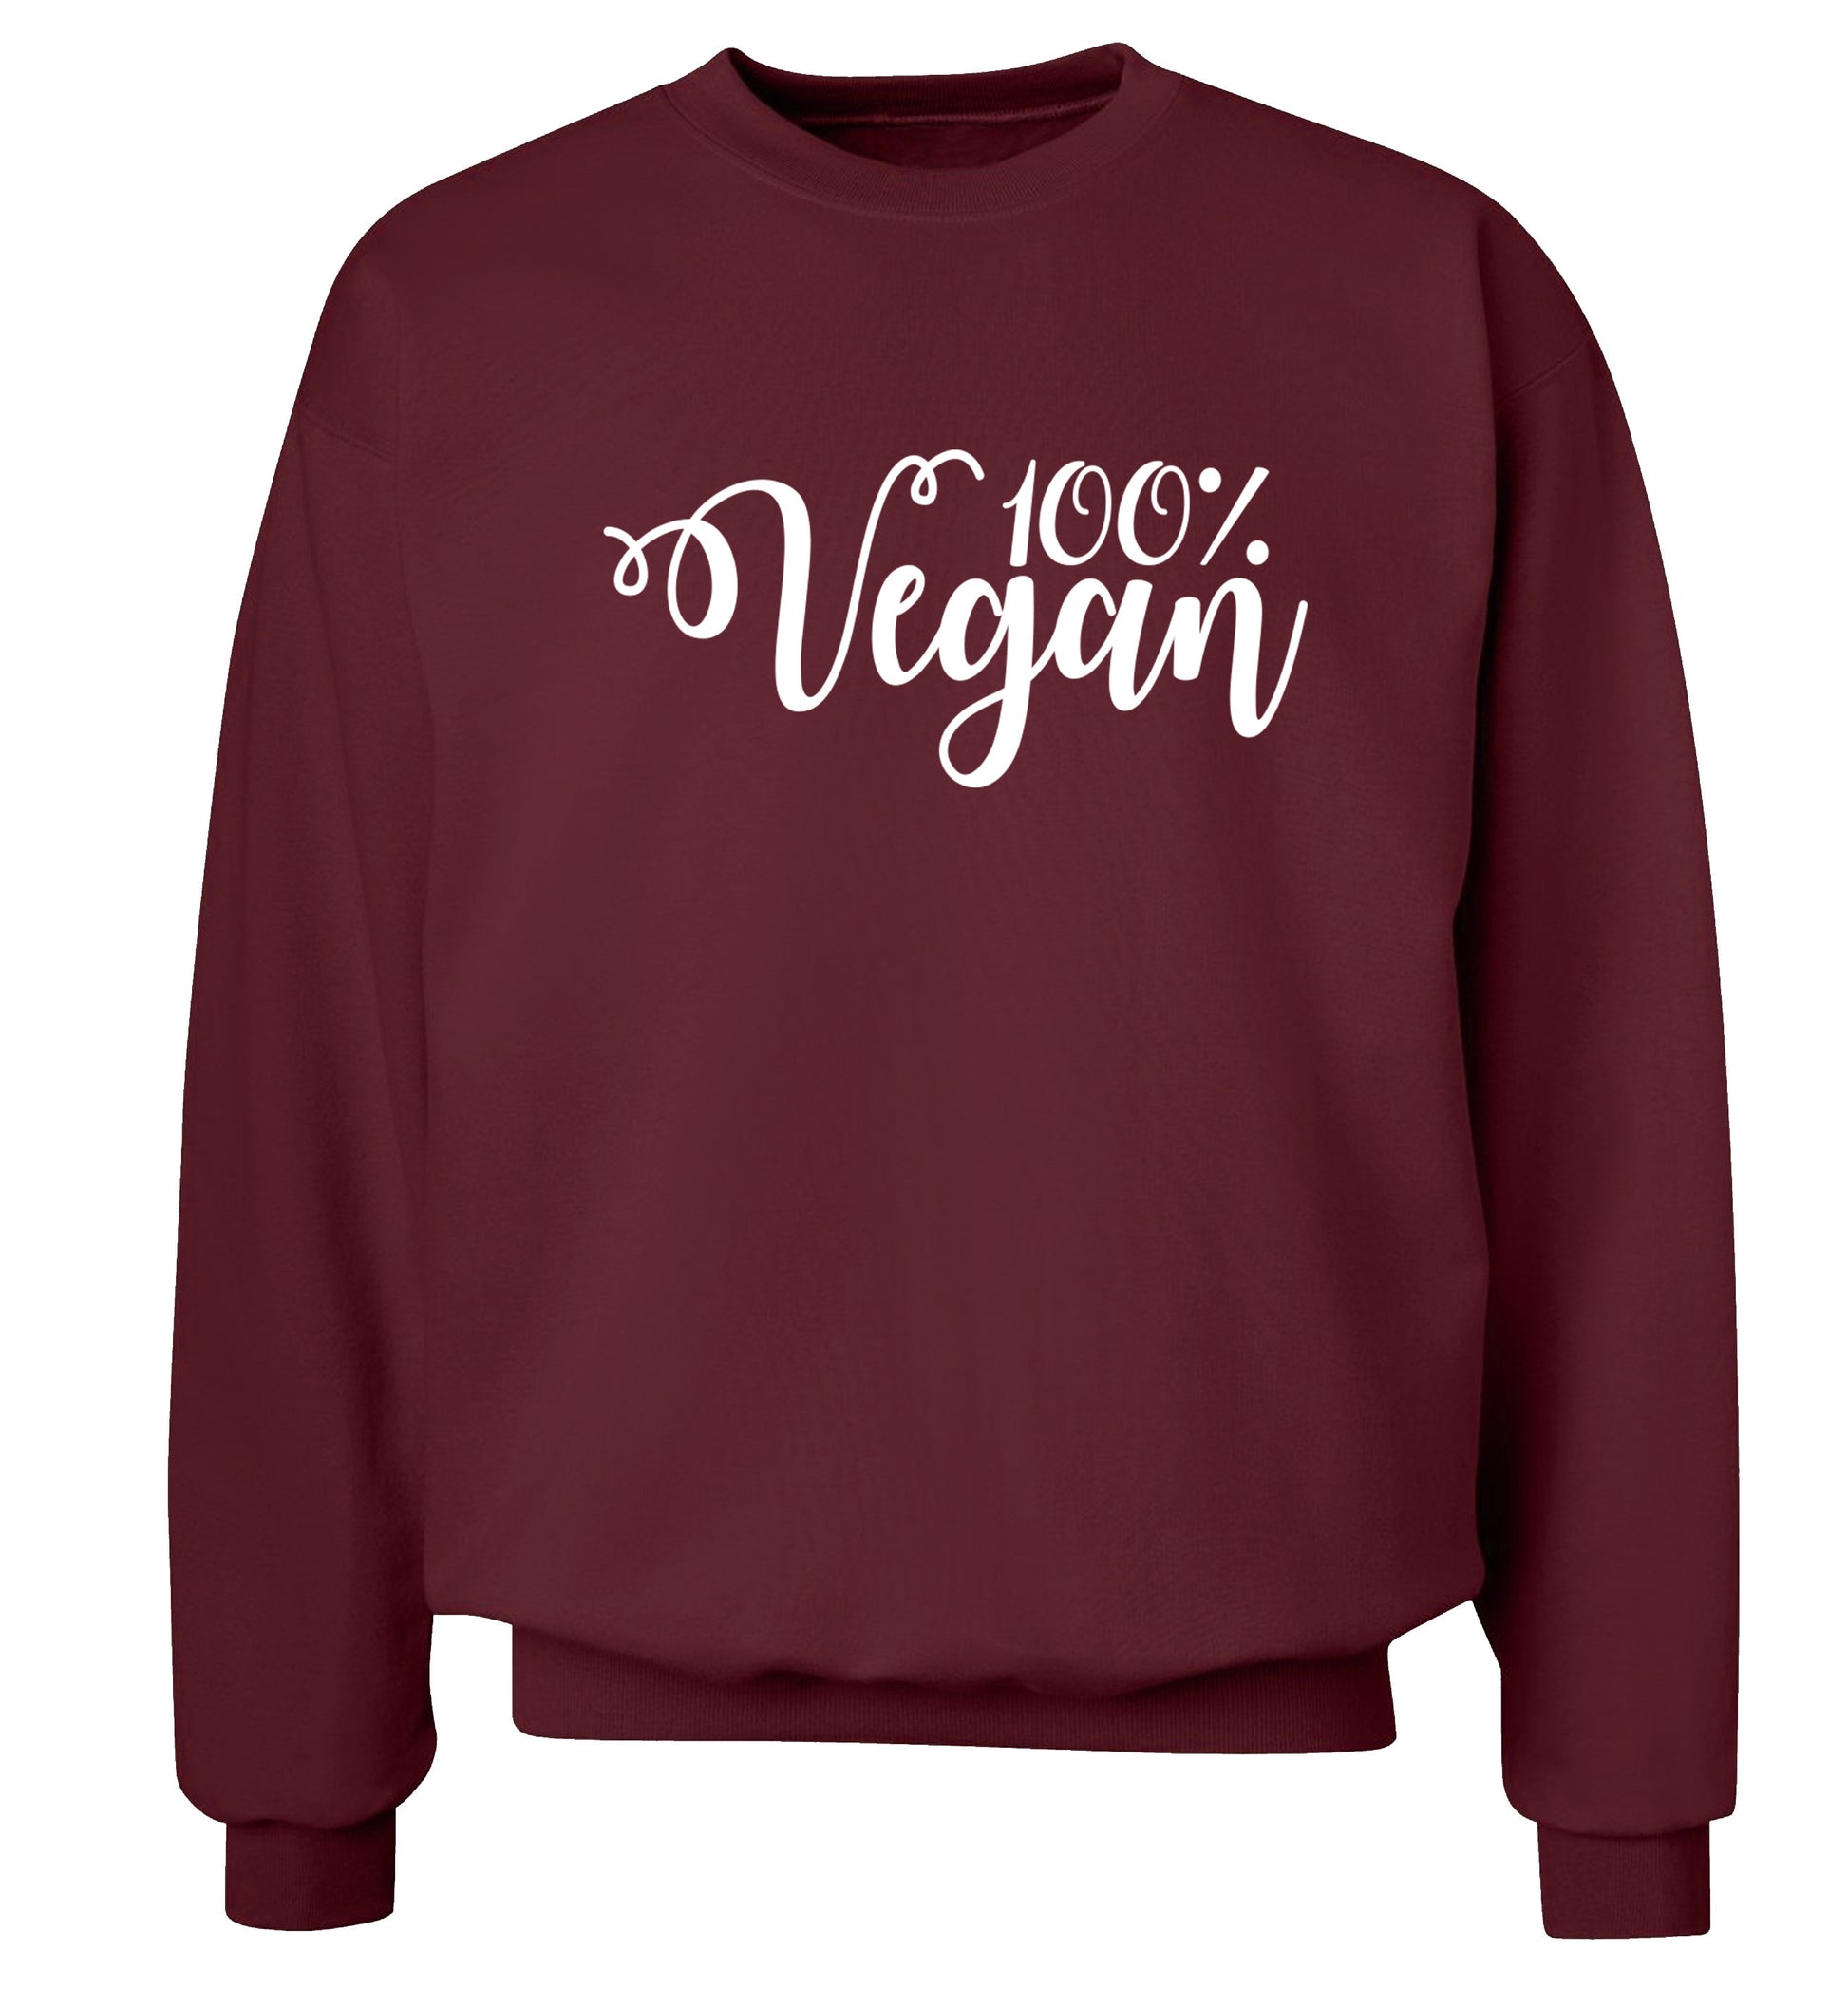 100% Vegan Adult's unisex maroon Sweater 2XL